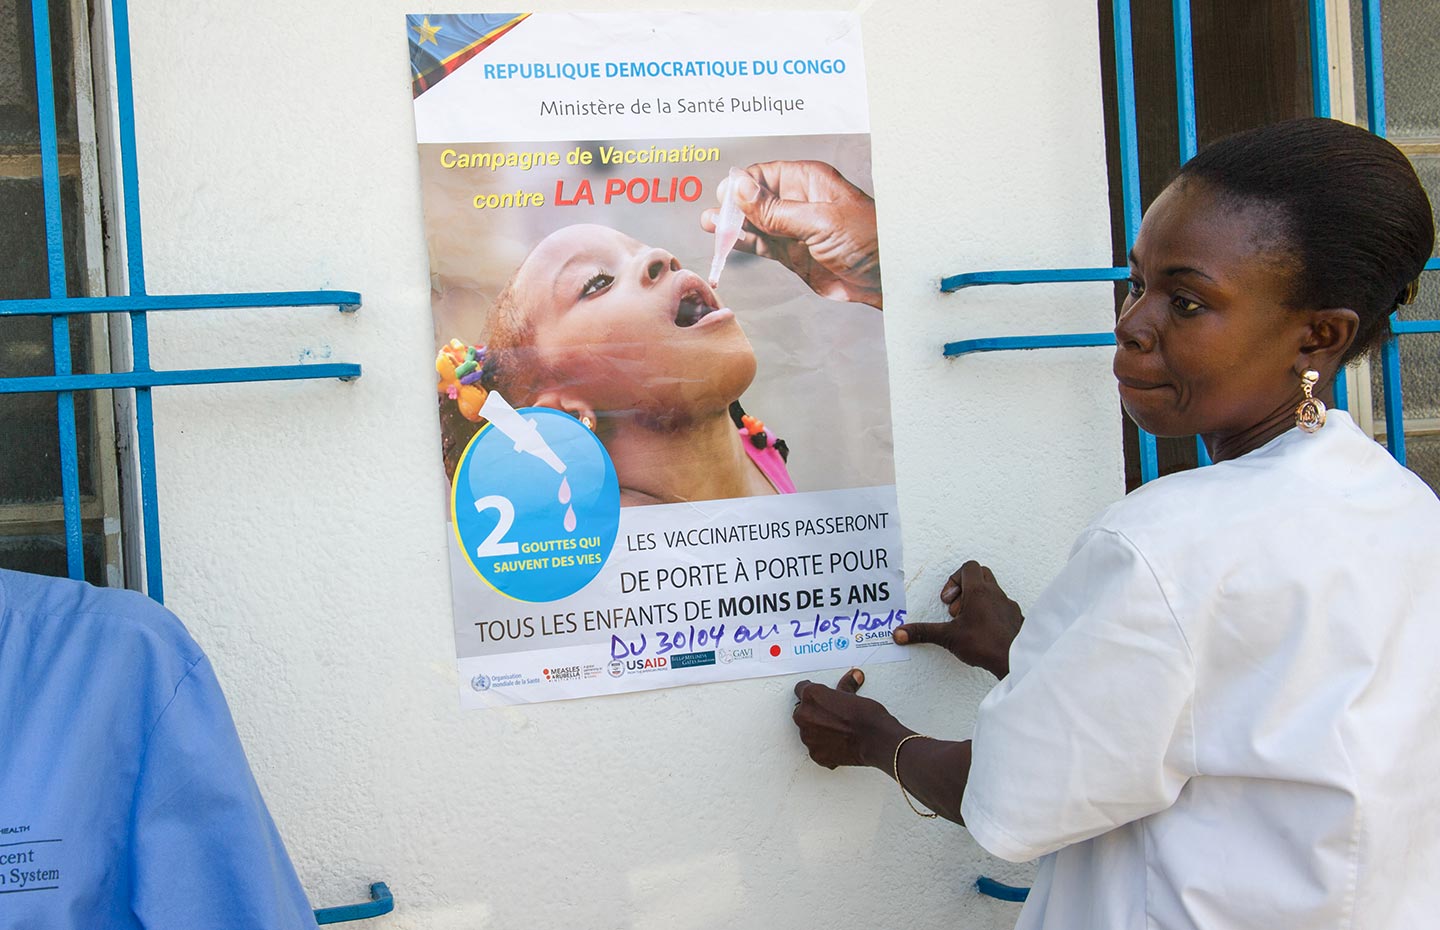 GAVI/2015/Phil Moore- A nurse attaches a poster advertising a door-to-door polio vaccination campaign in Kinshasa, Democratic Republic of the Congo, on April 27, 2015